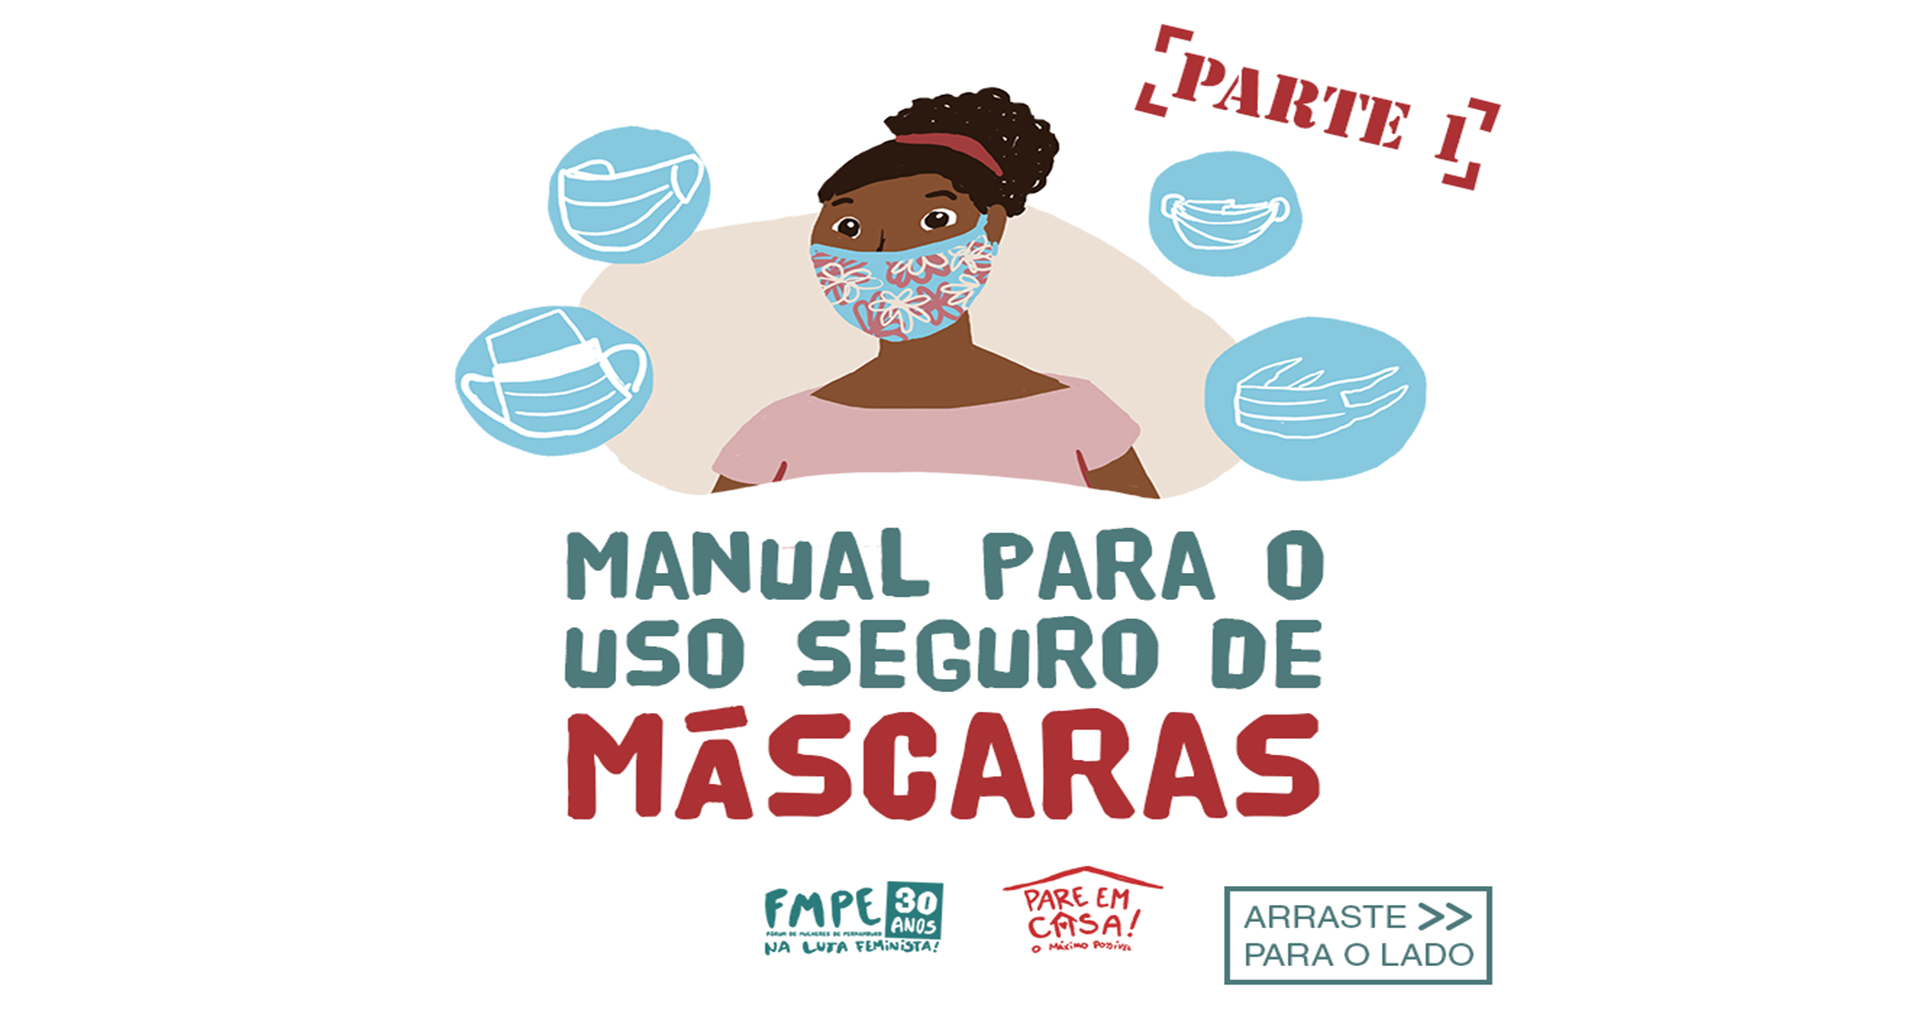 FMPE lança Manual de uso seguro de máscaras